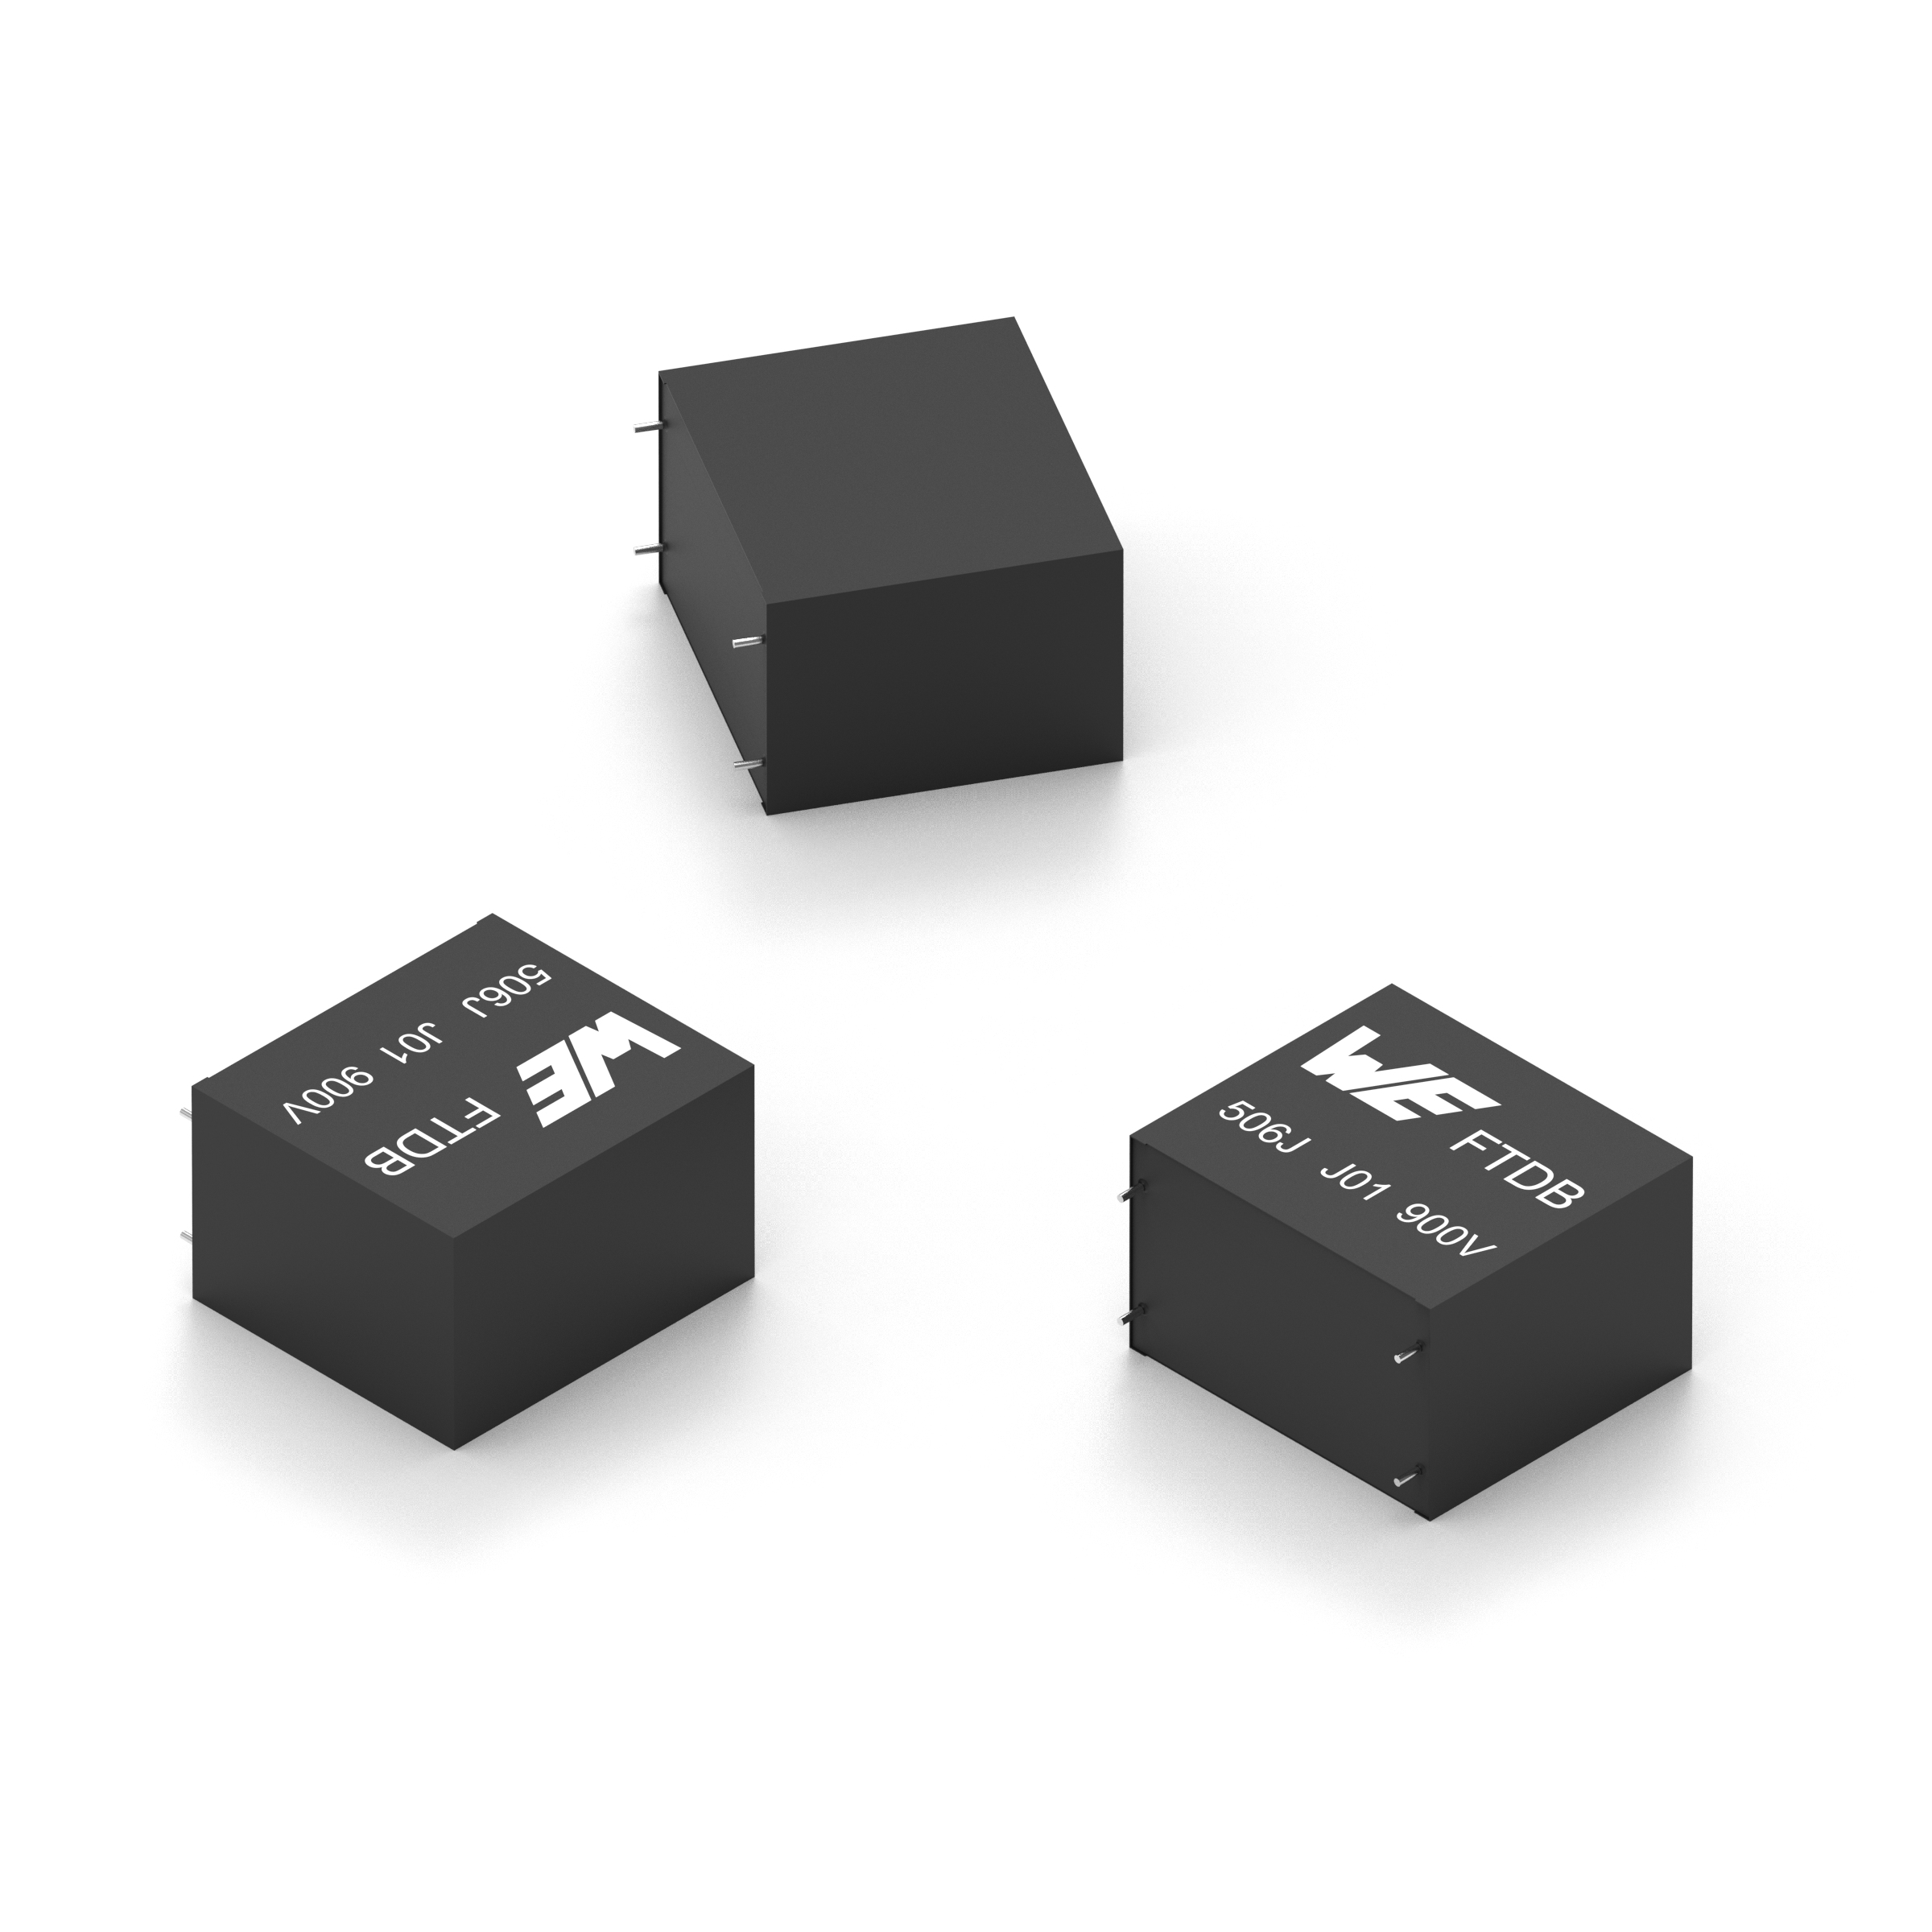 Würth Elektronik presents film capacitors designed for DC-Link applications